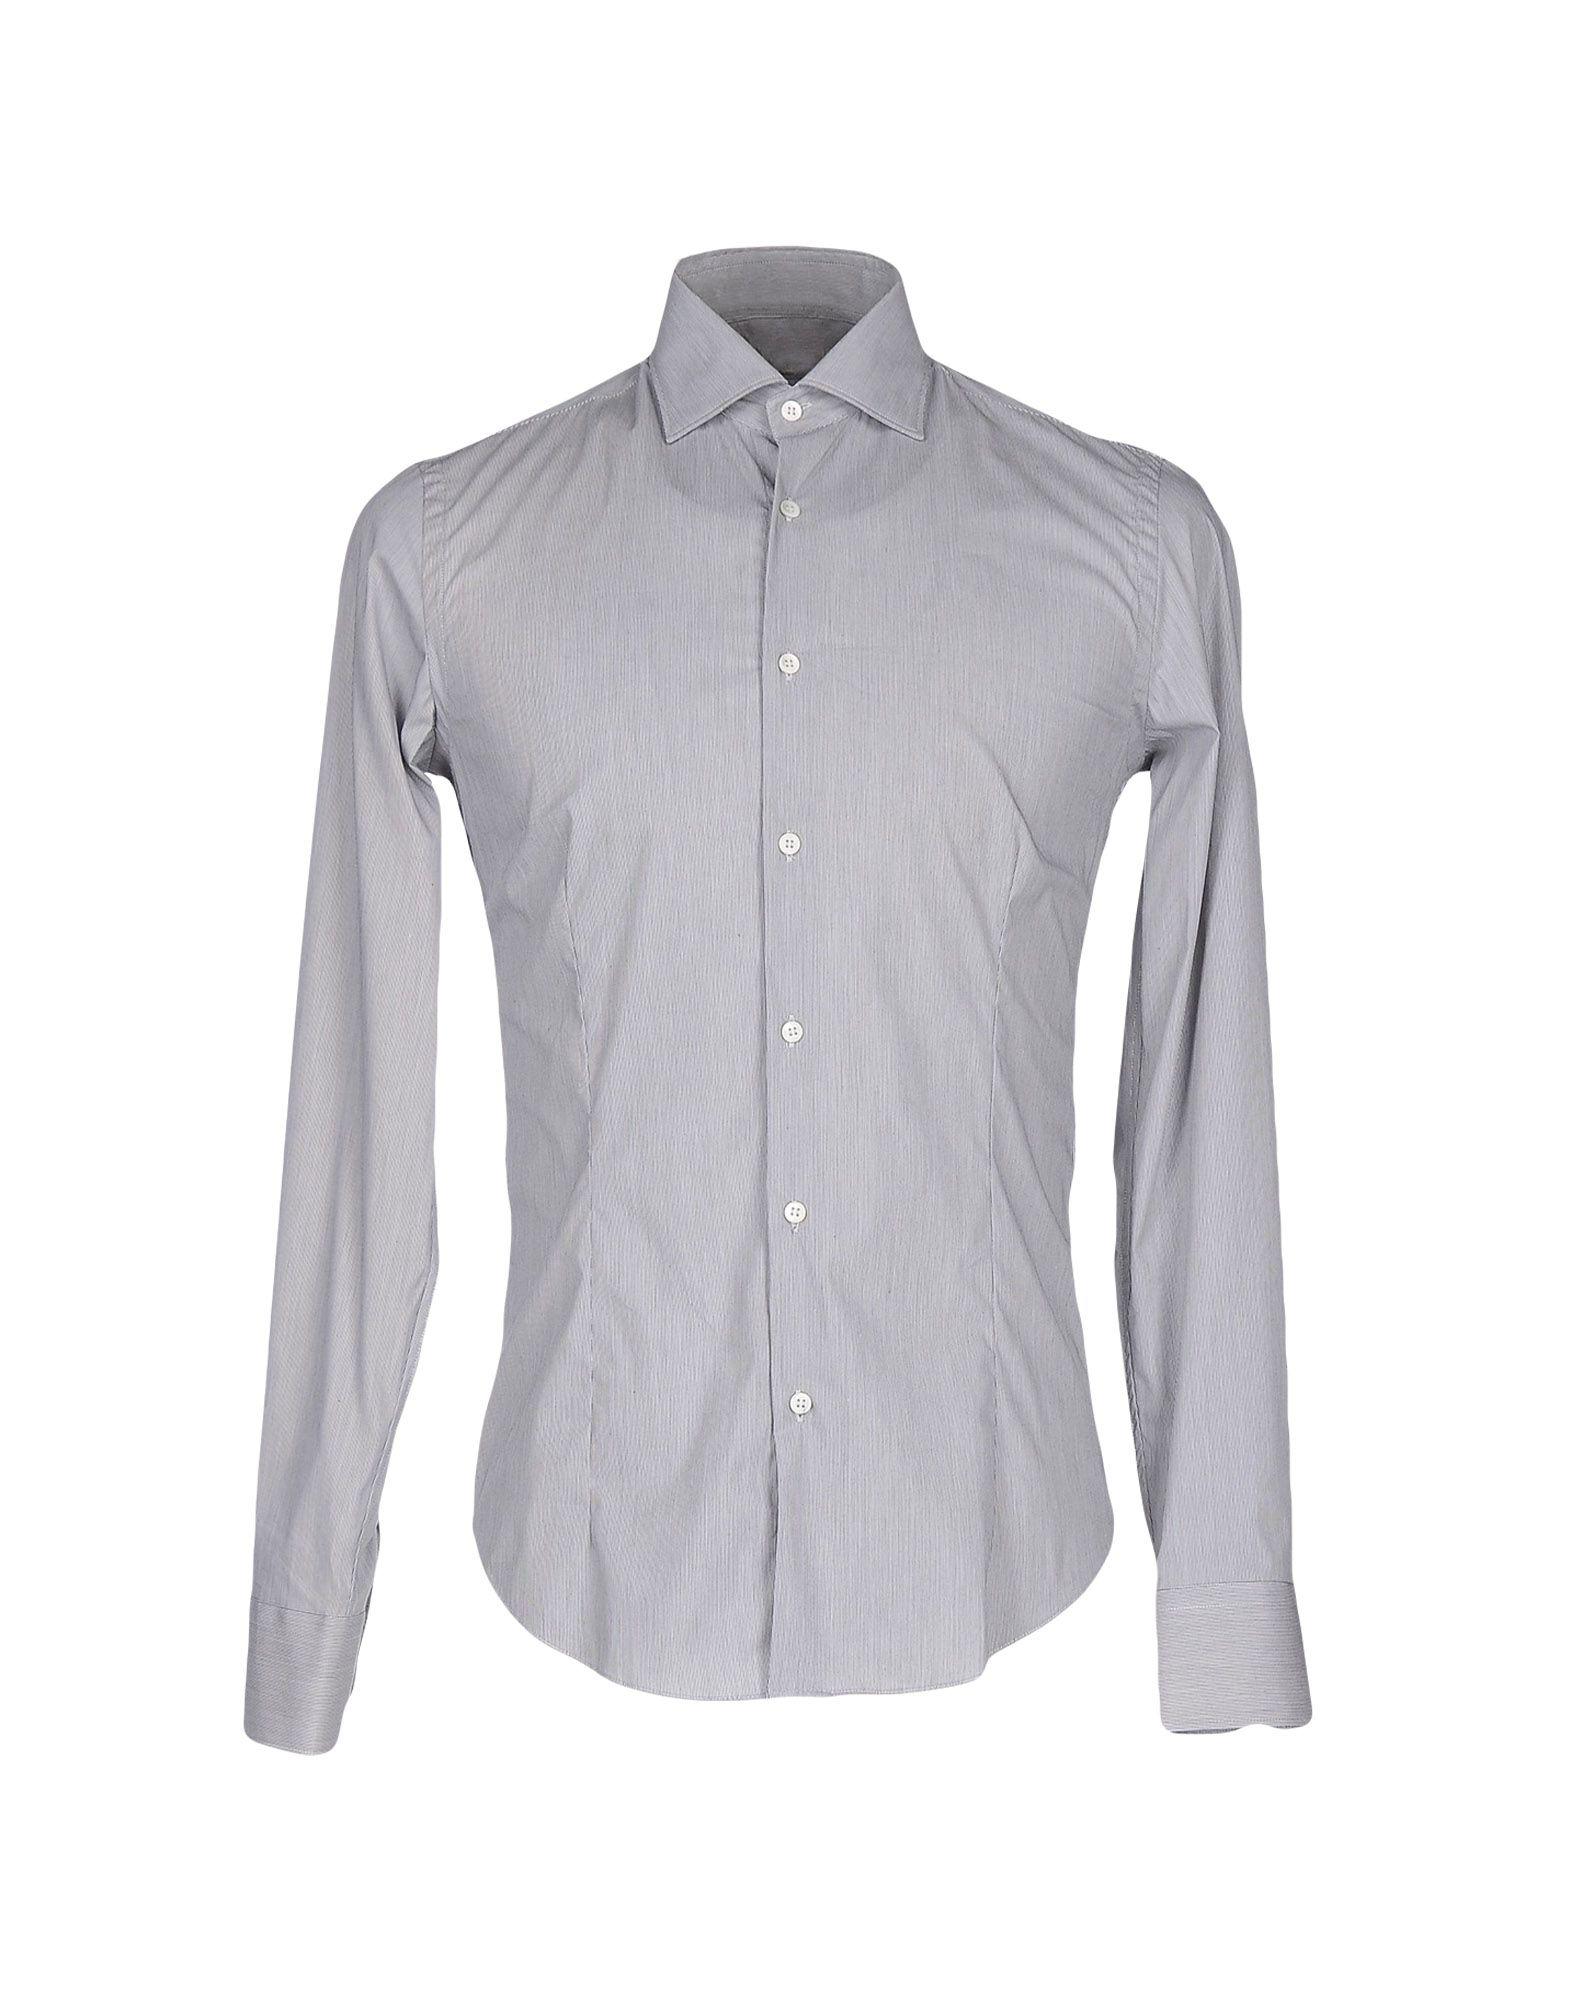 Bagutta Cotton Shirt in Light Grey (Blue) for Men - Lyst